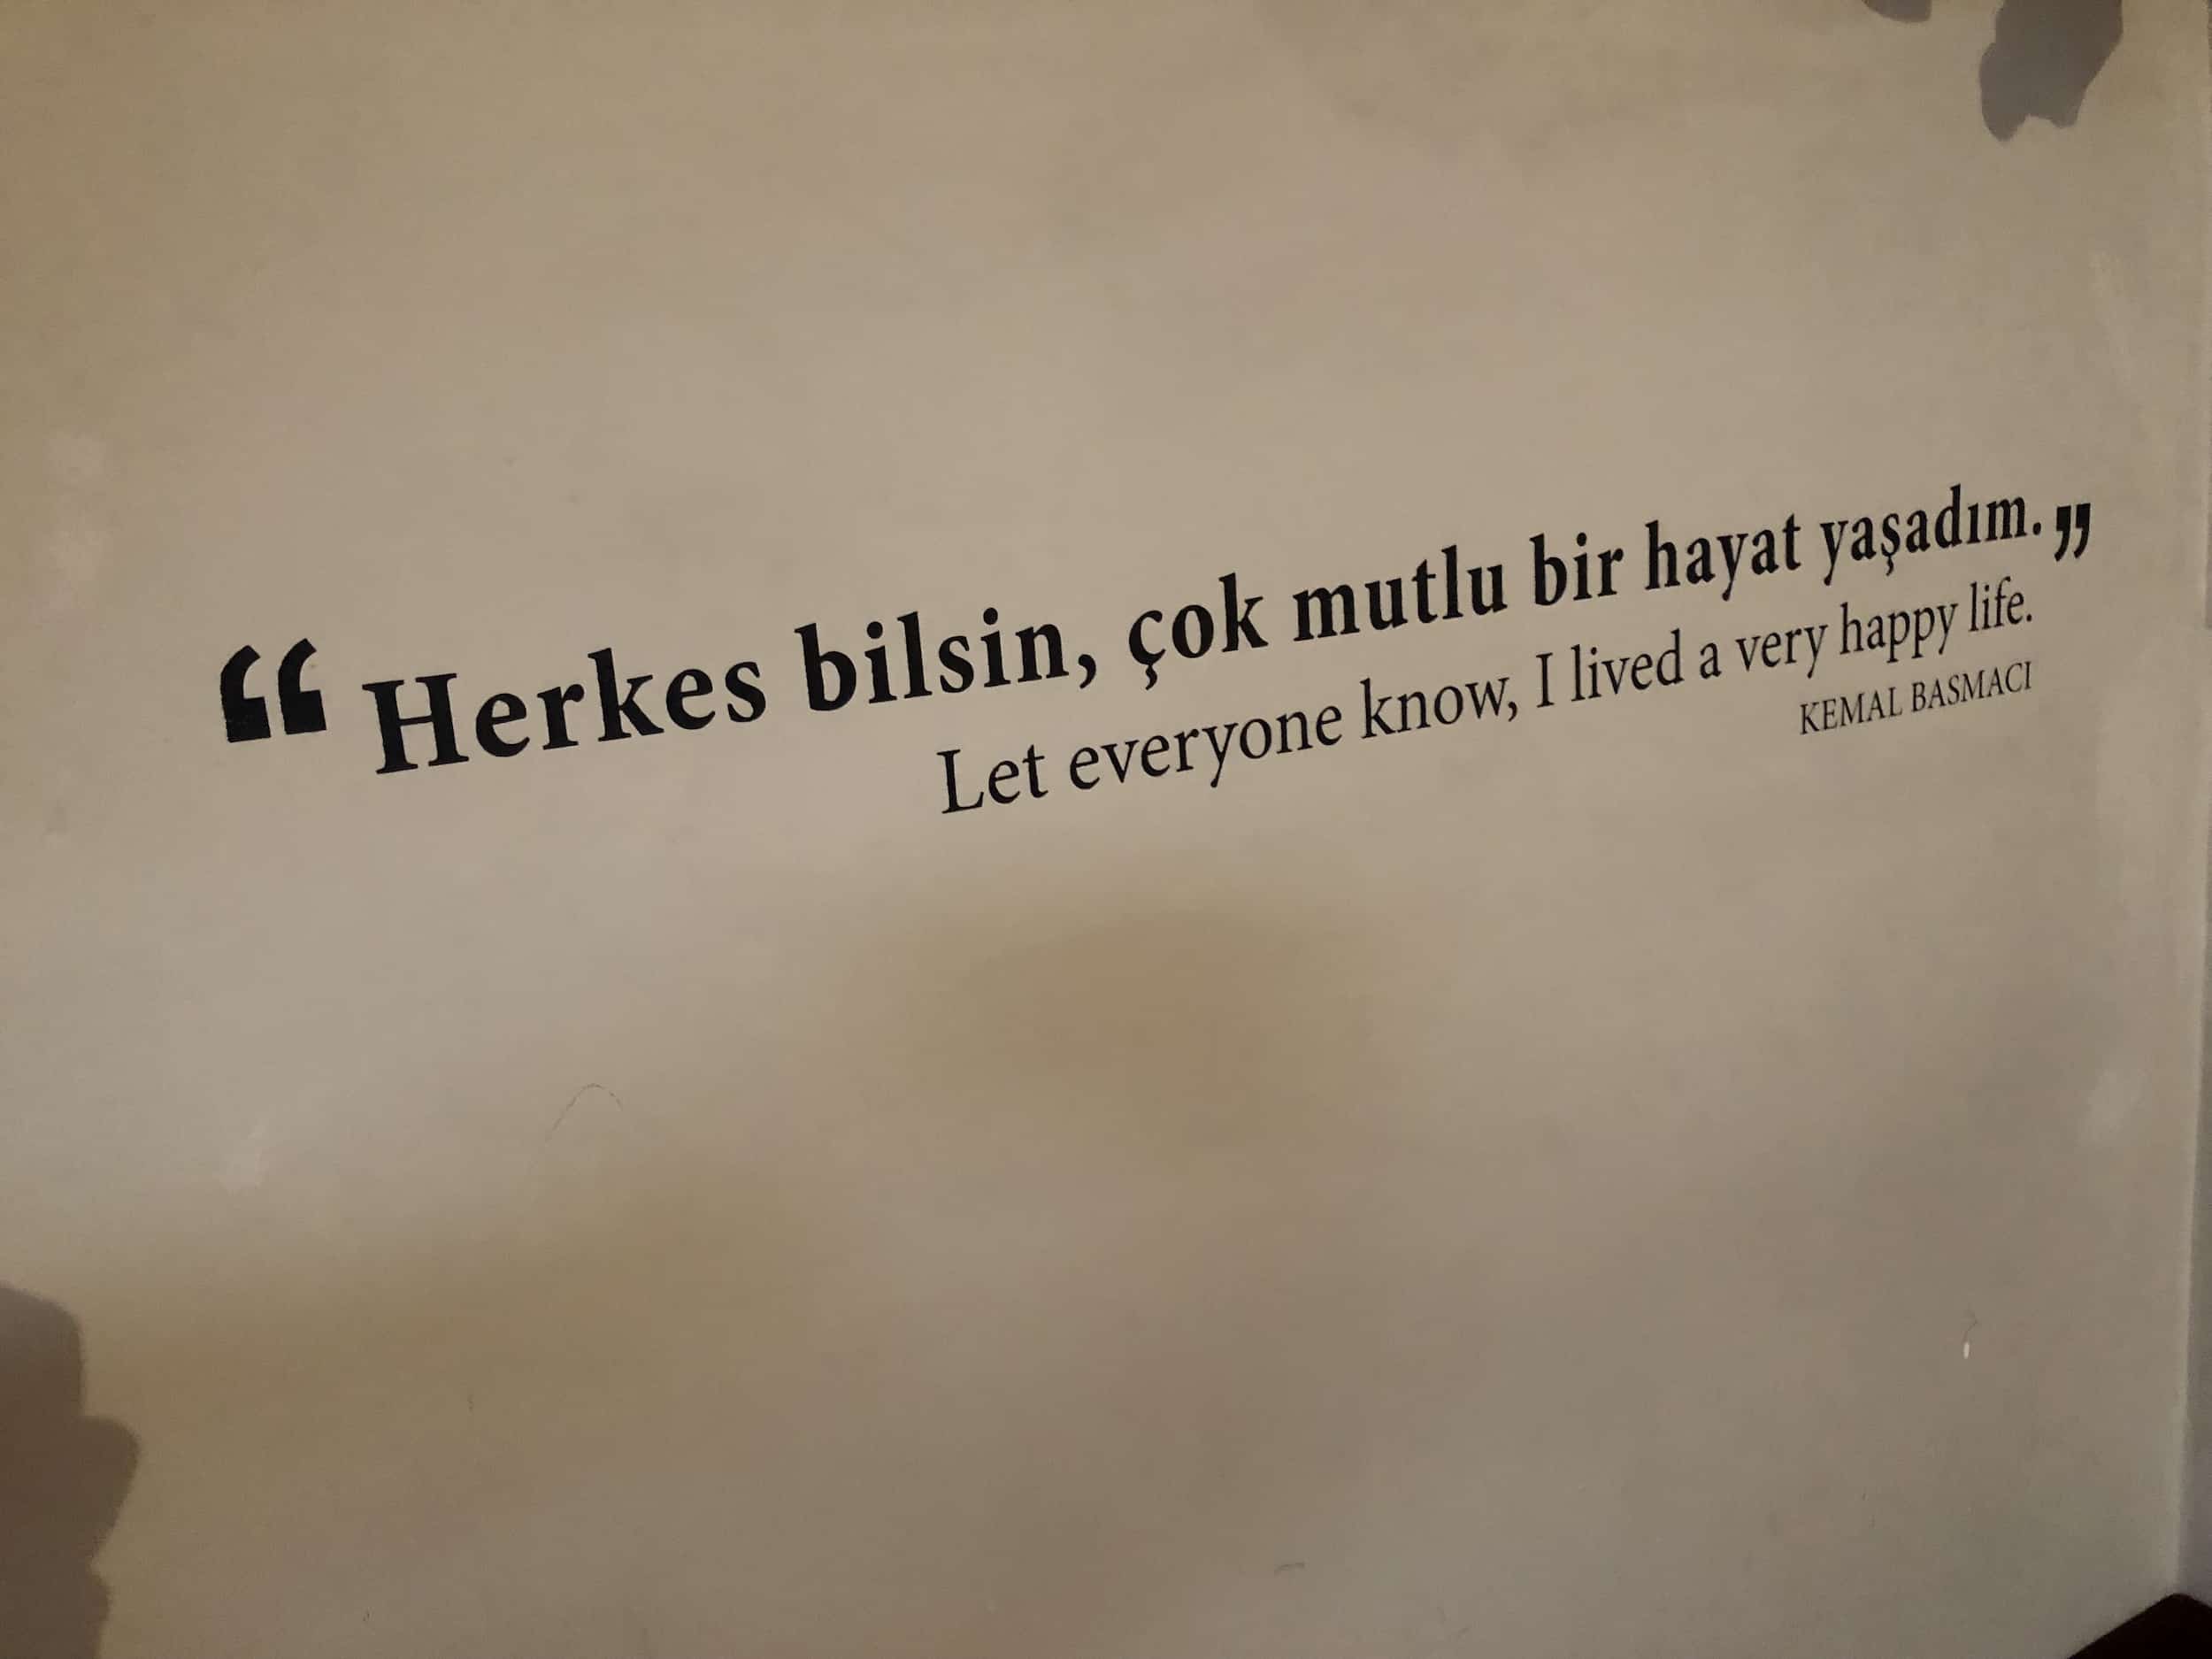 "Let everyone know, I lived a very happy life" - Kemal Basmacı